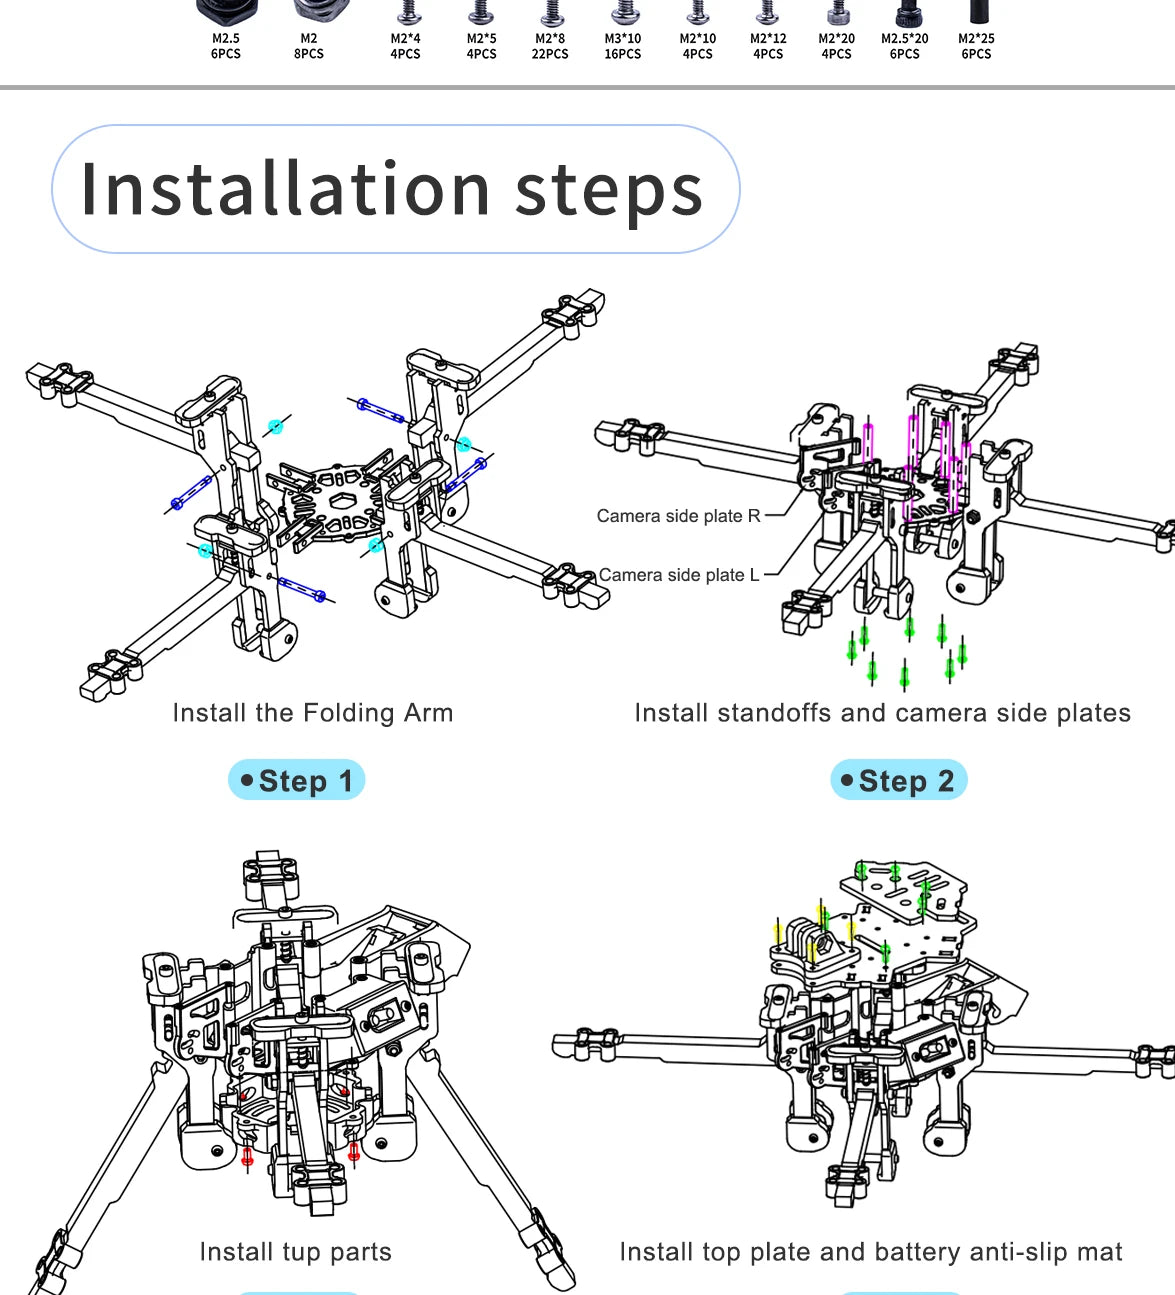 Axisflying KOLAS6", GPCS 6PCS Installation steps Step 1 Step 2 Install parts Install plate and battery anti